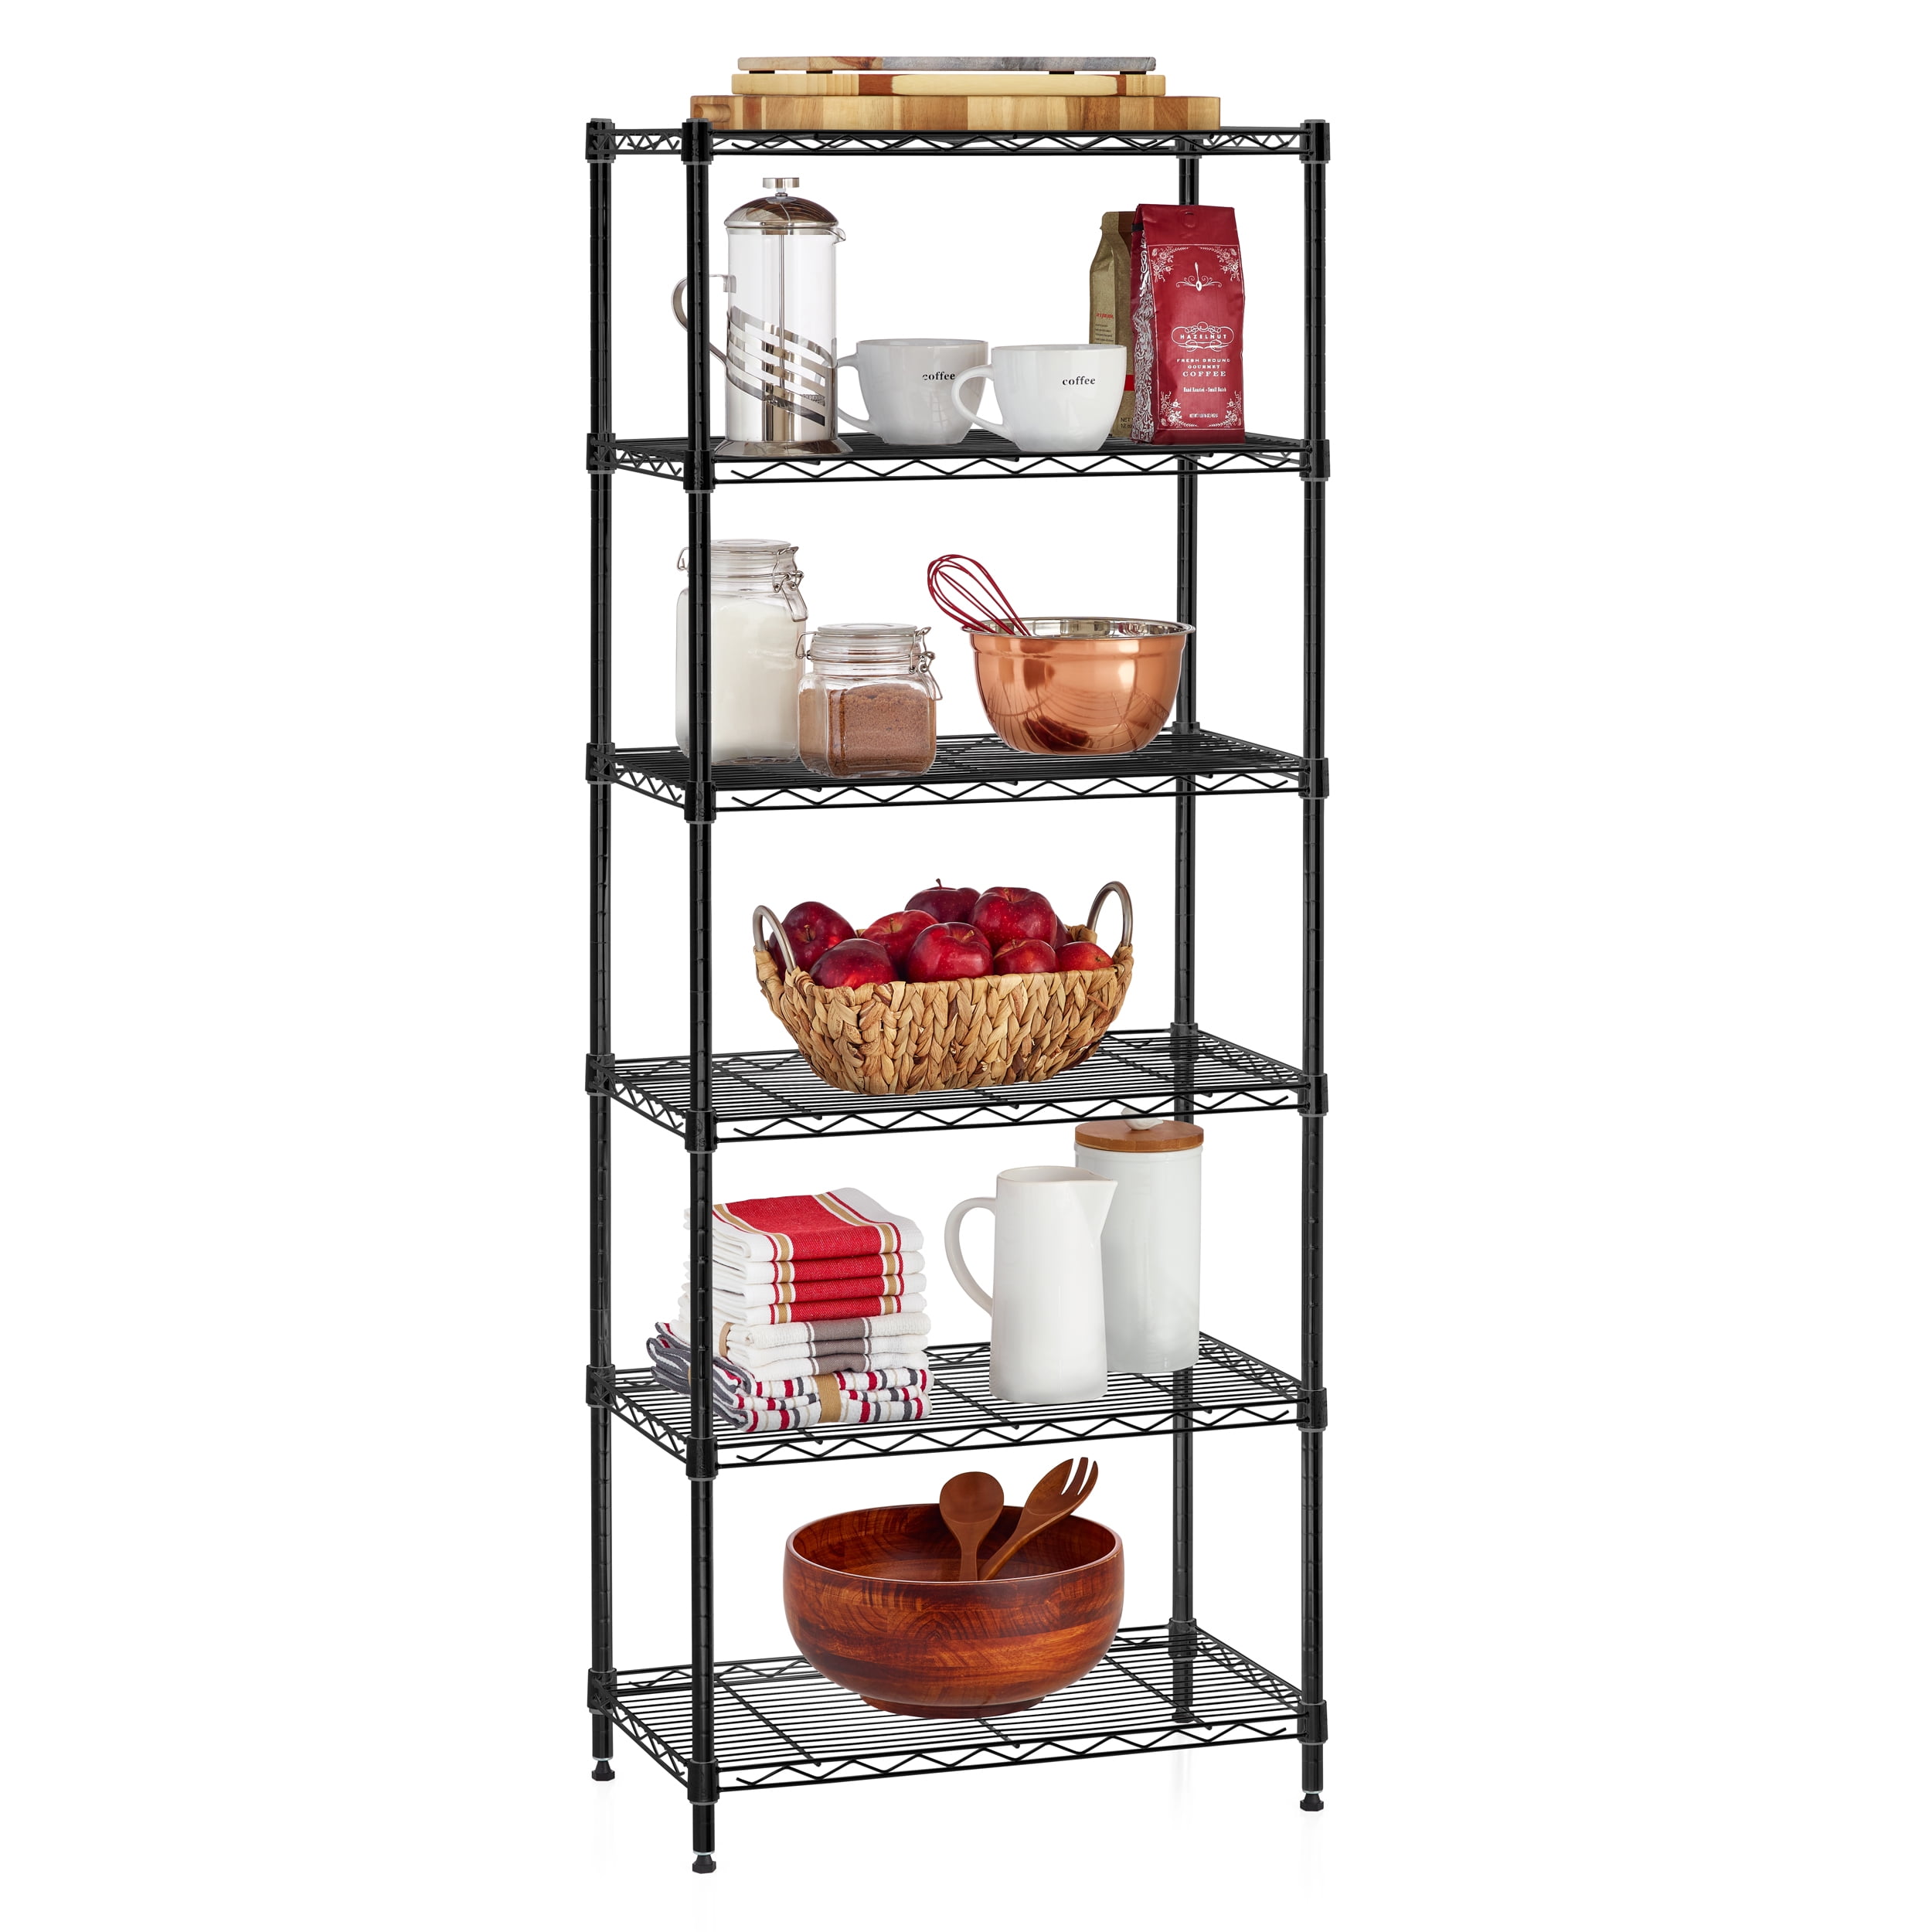 Details about   Devo 6-Shelf Adjustable Height Storage Shelf Standing Organizer Shelf B s a e 59 